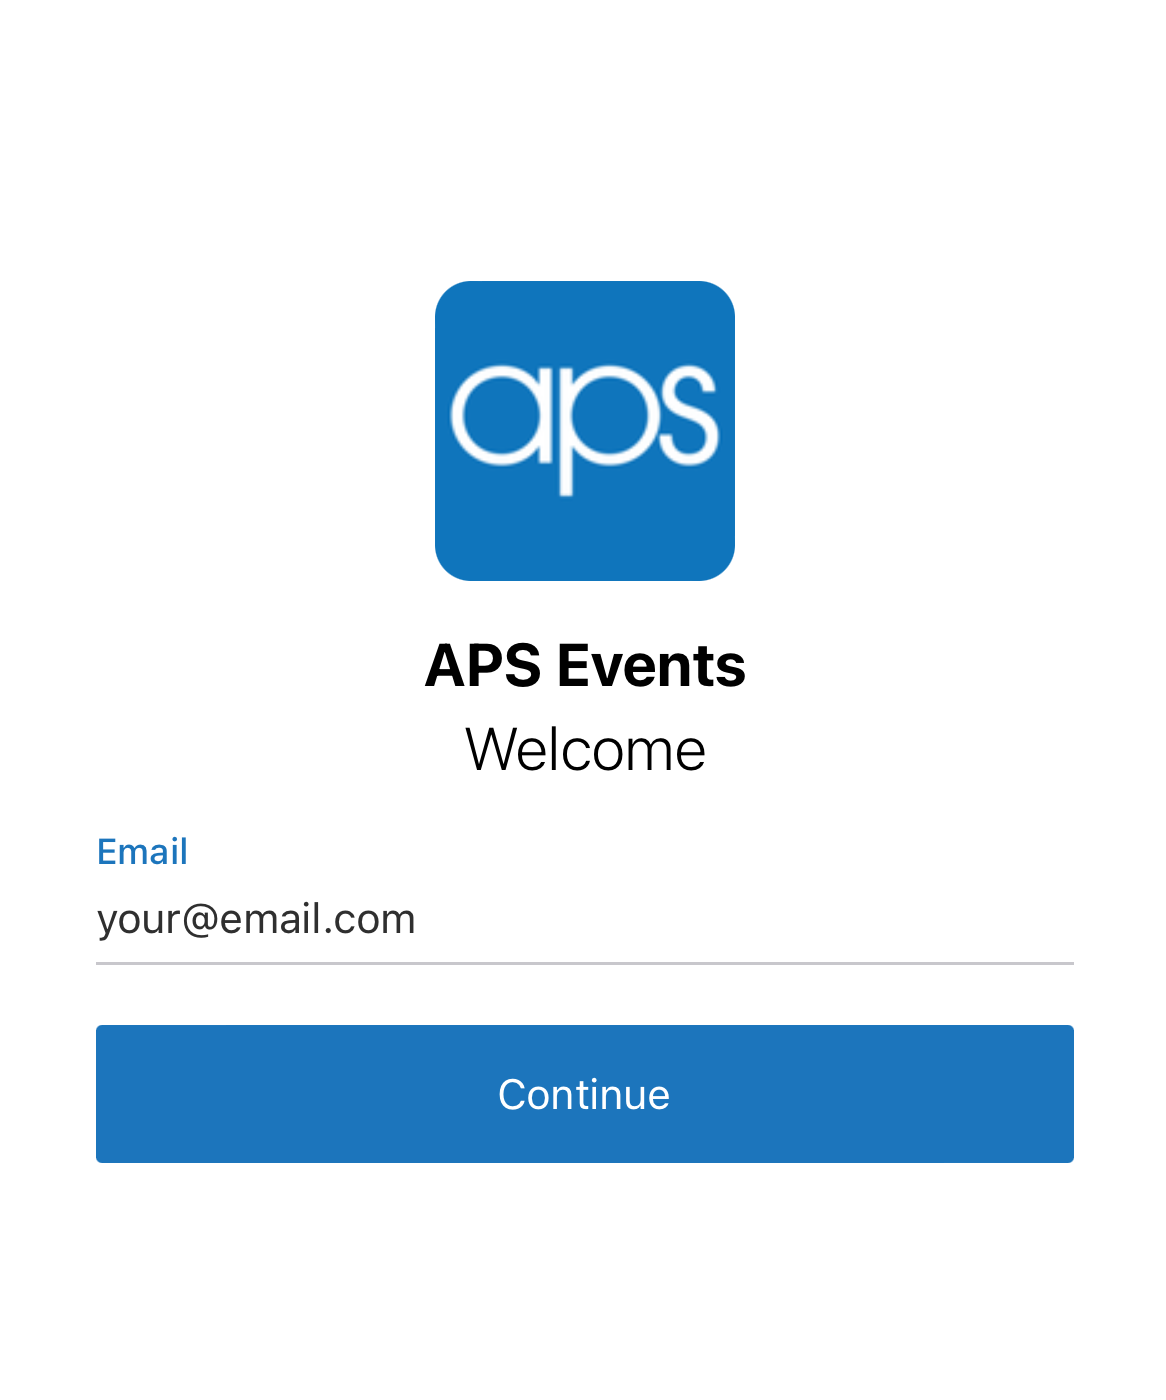 APS Event App Login Screen Password Reset Step 1